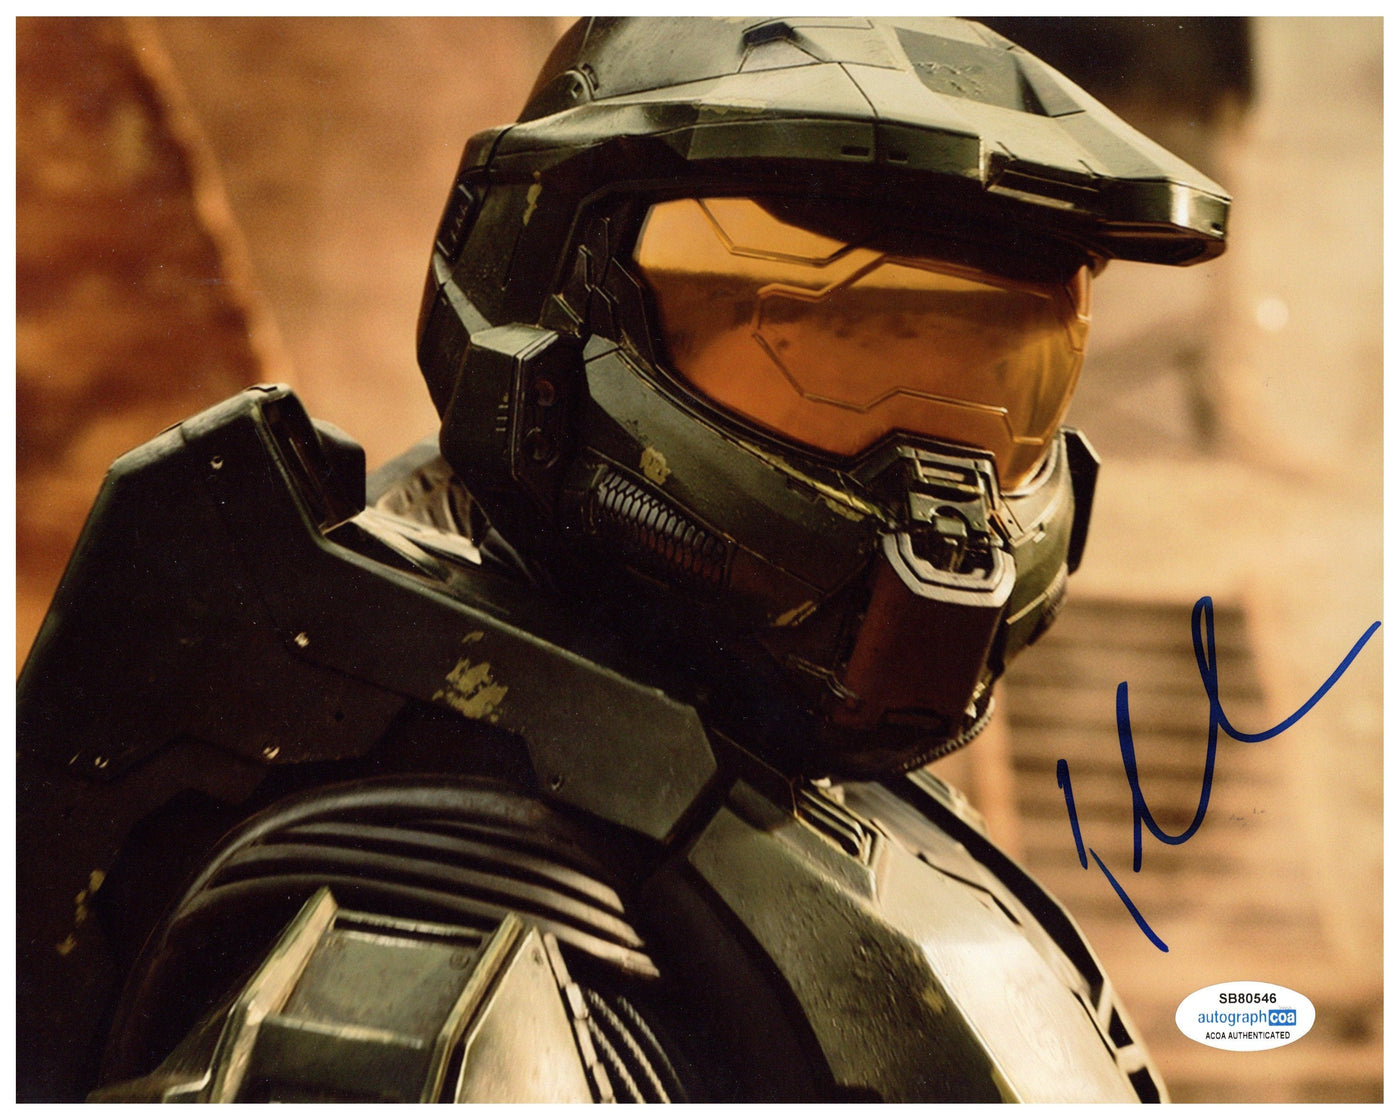 Pablo Schreiber Signed 8x10 Photo Halo Master Chief Autographed ACOA